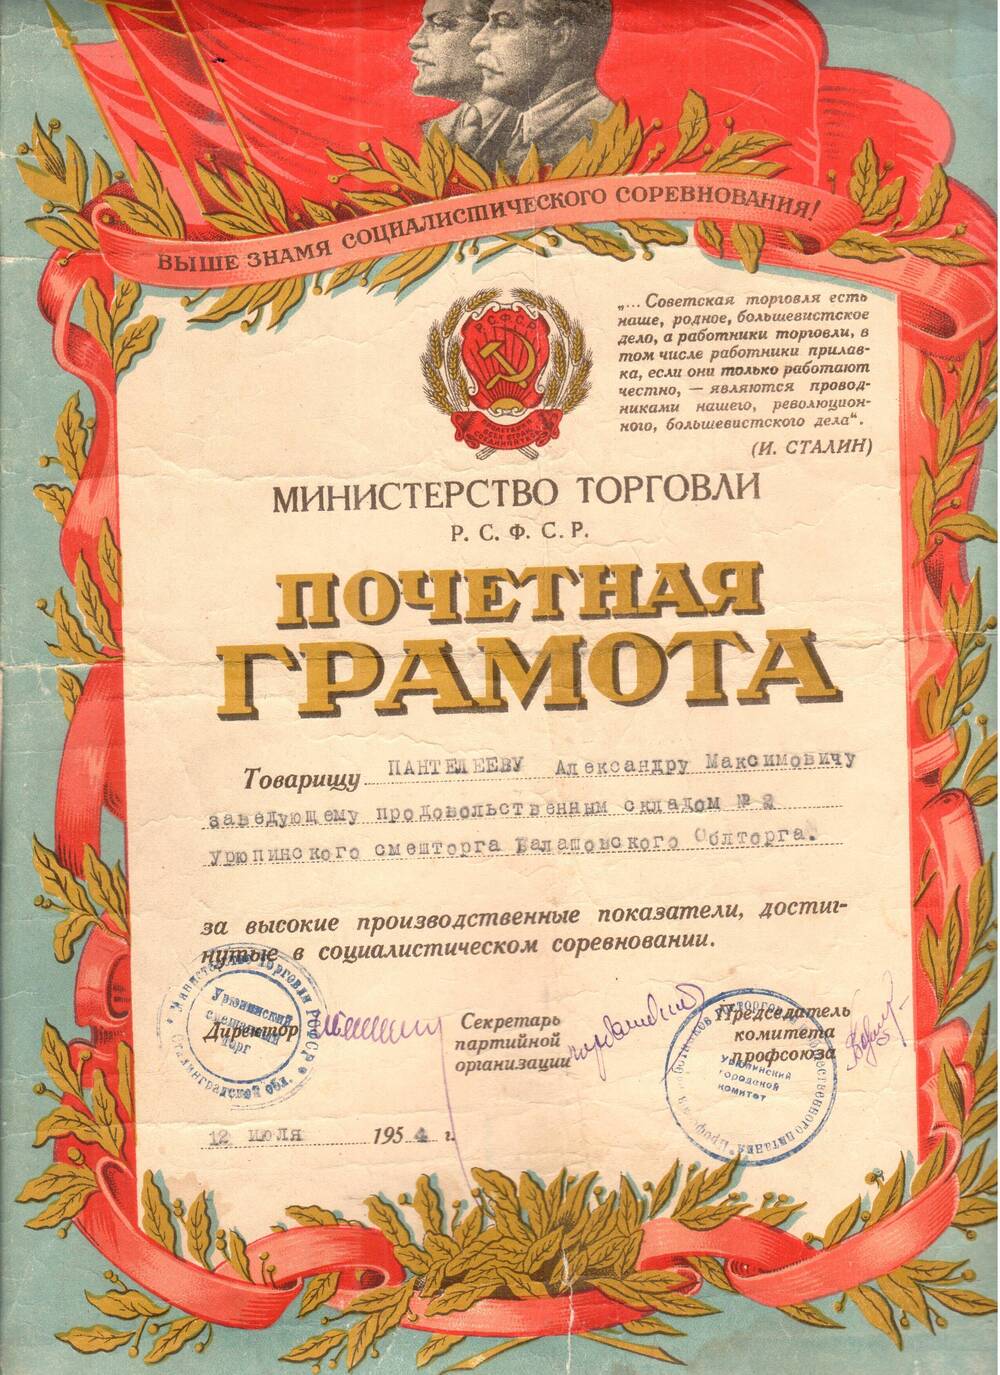 Почетная грамота Пантелееву Александру Максимовичу от Министерства торговли от 12 июля 1954 г.